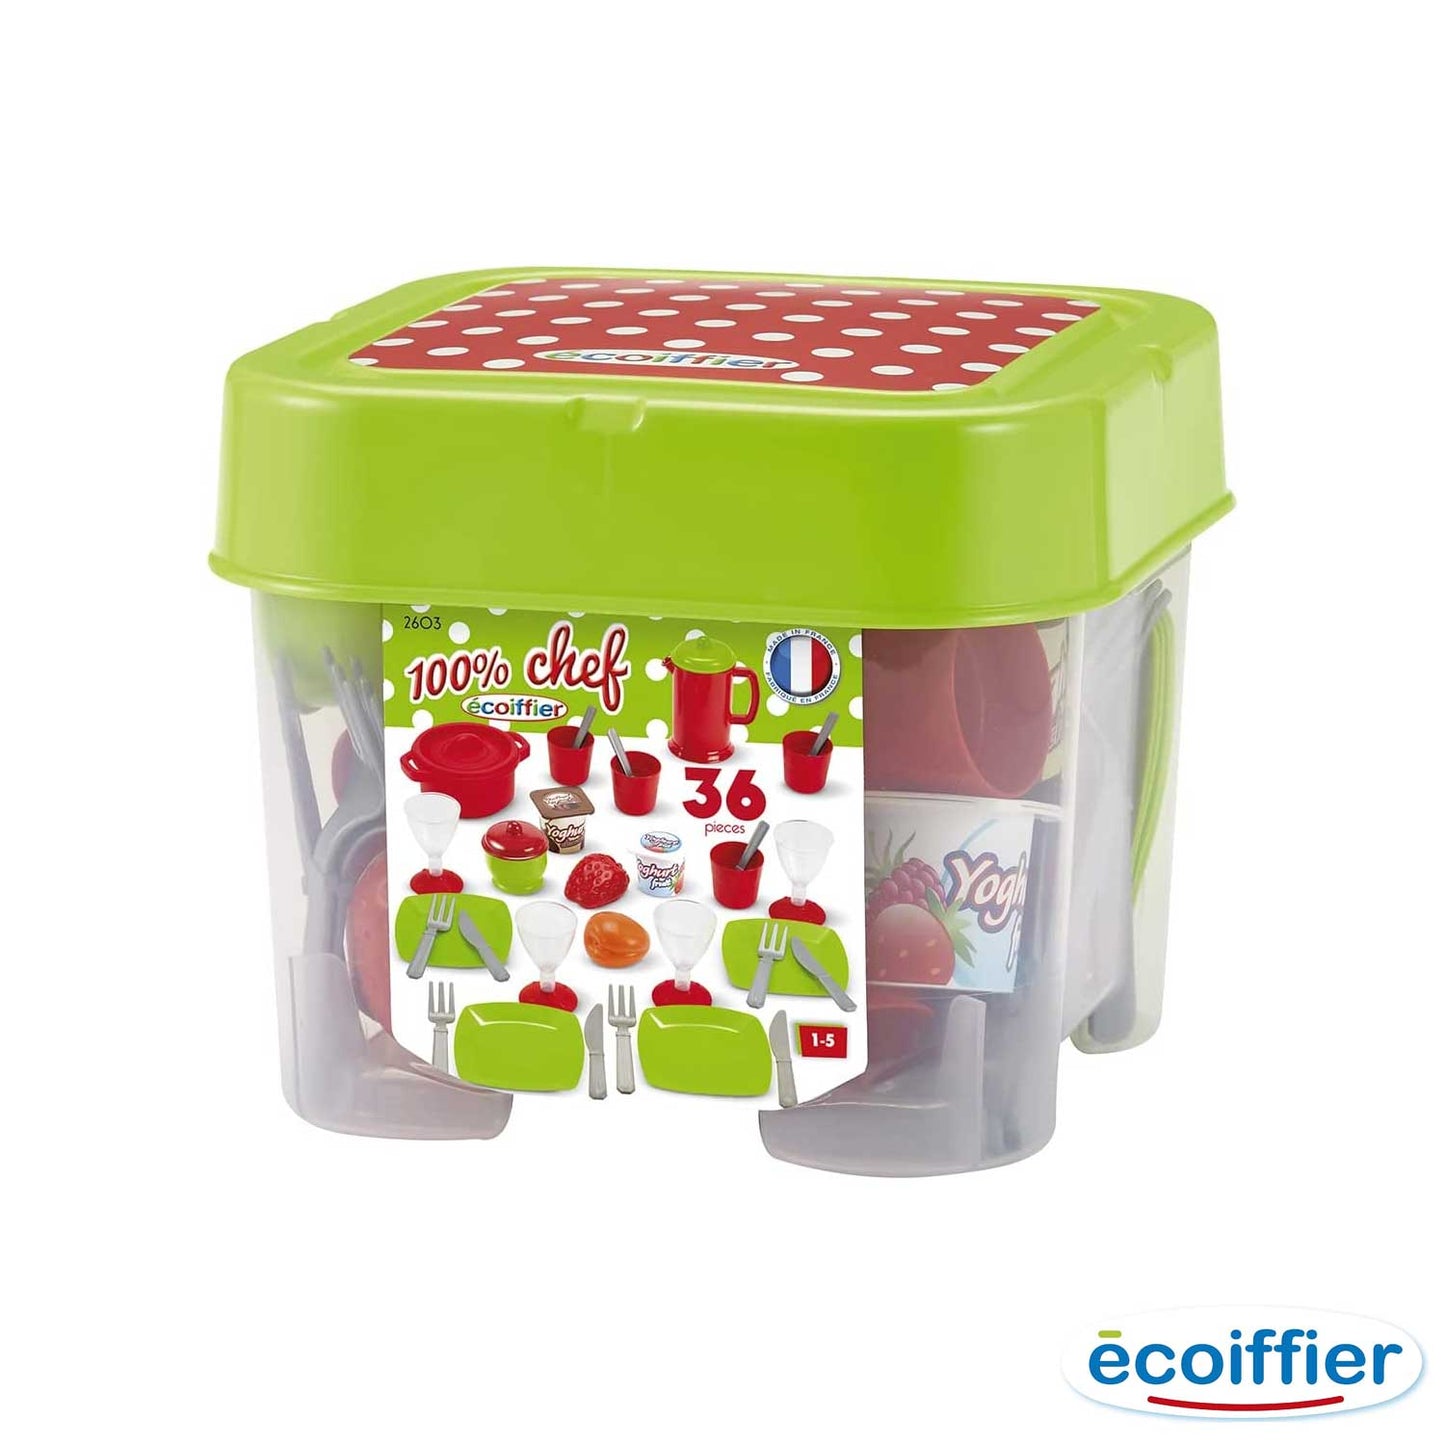 Ecoiffier - Chef's box